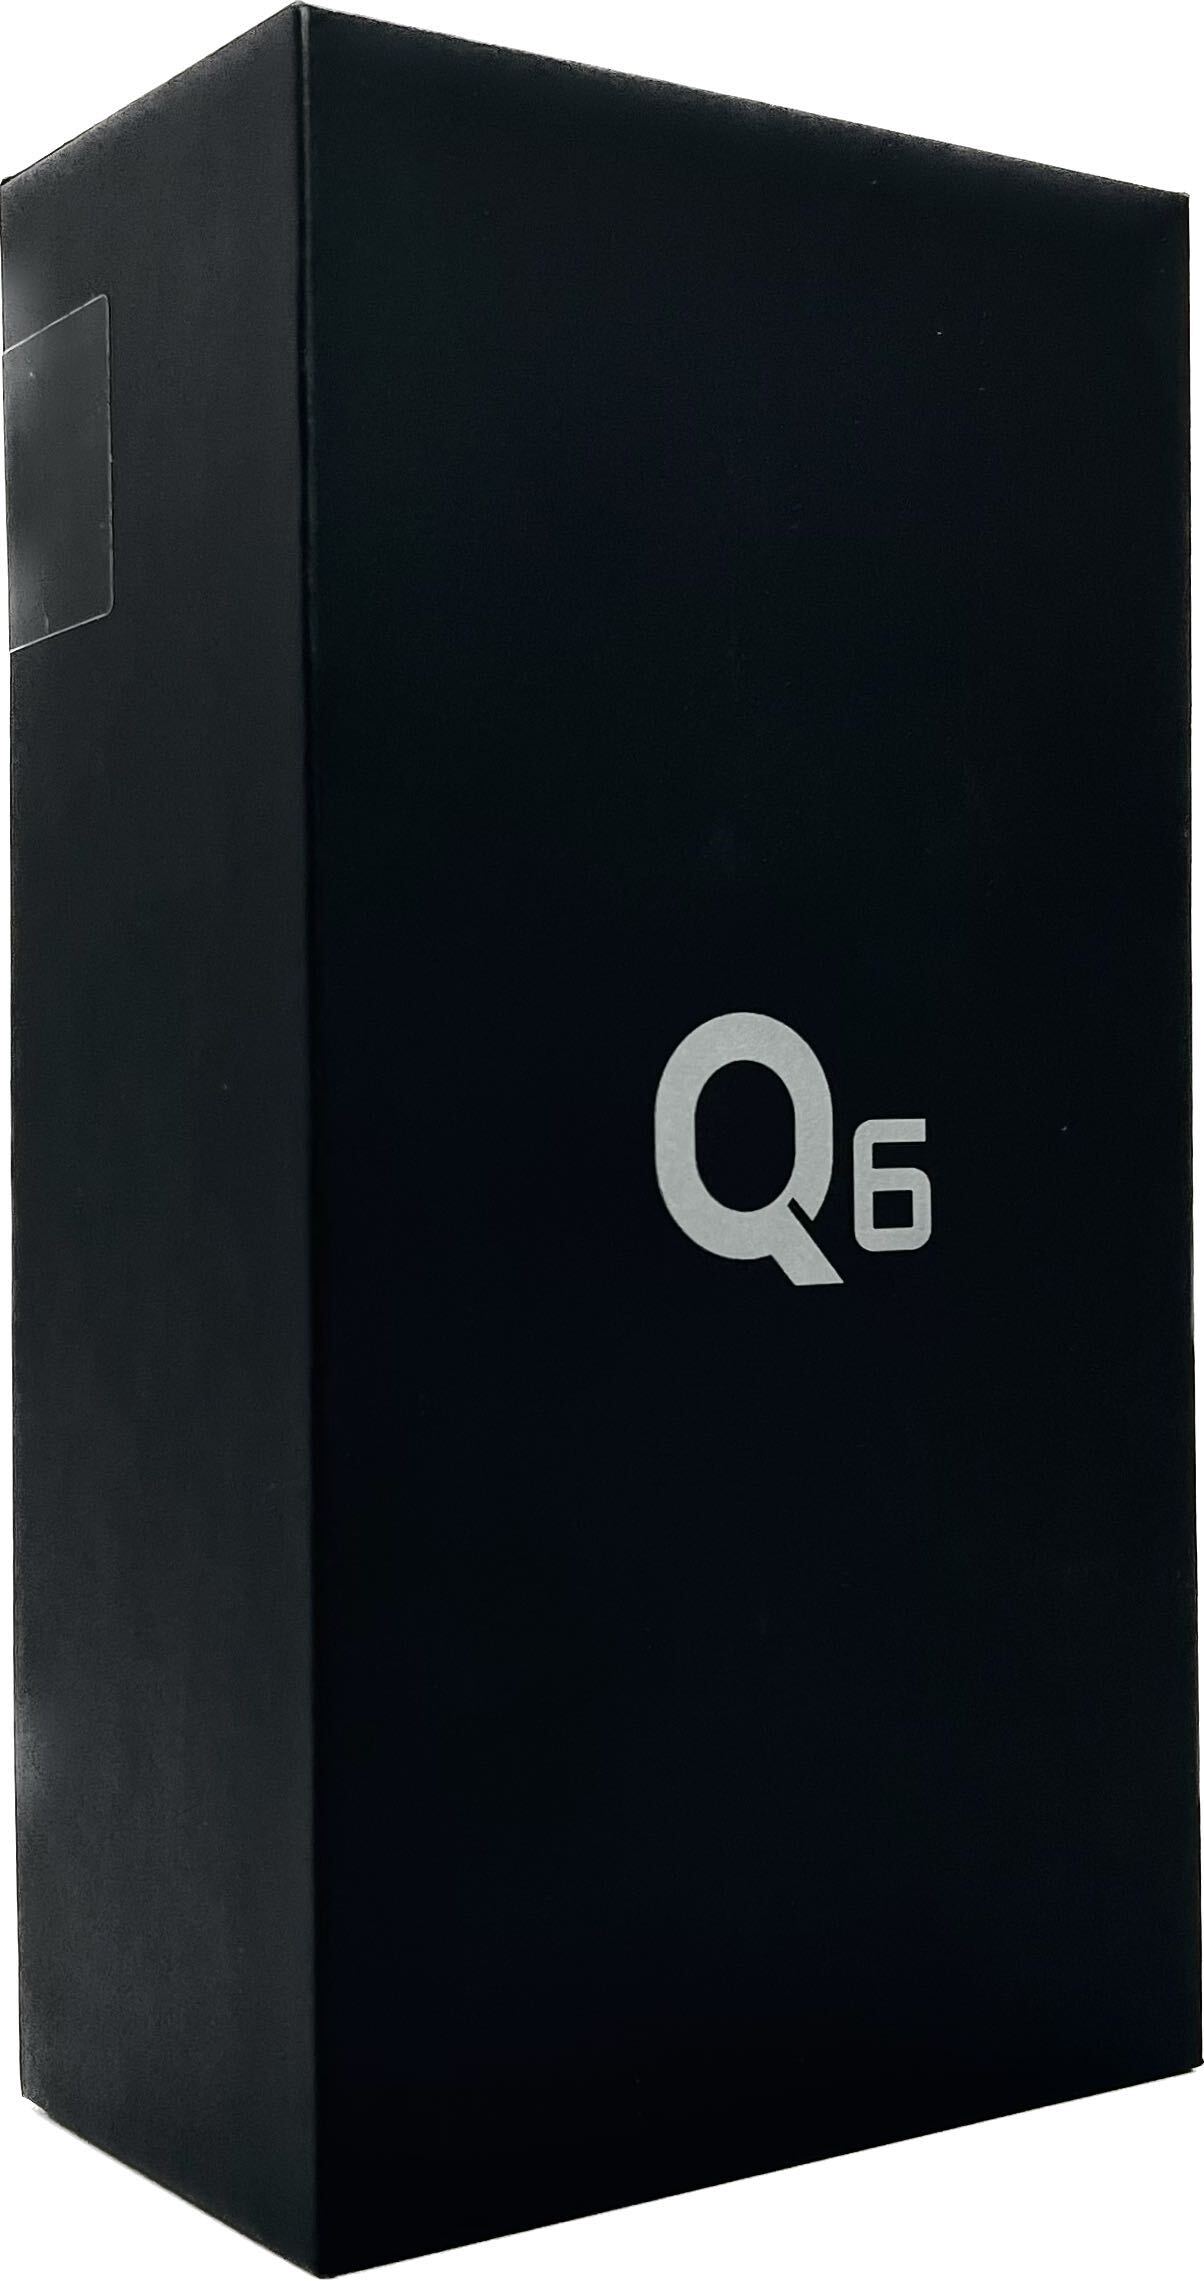 LG Q6 (Unlocked)